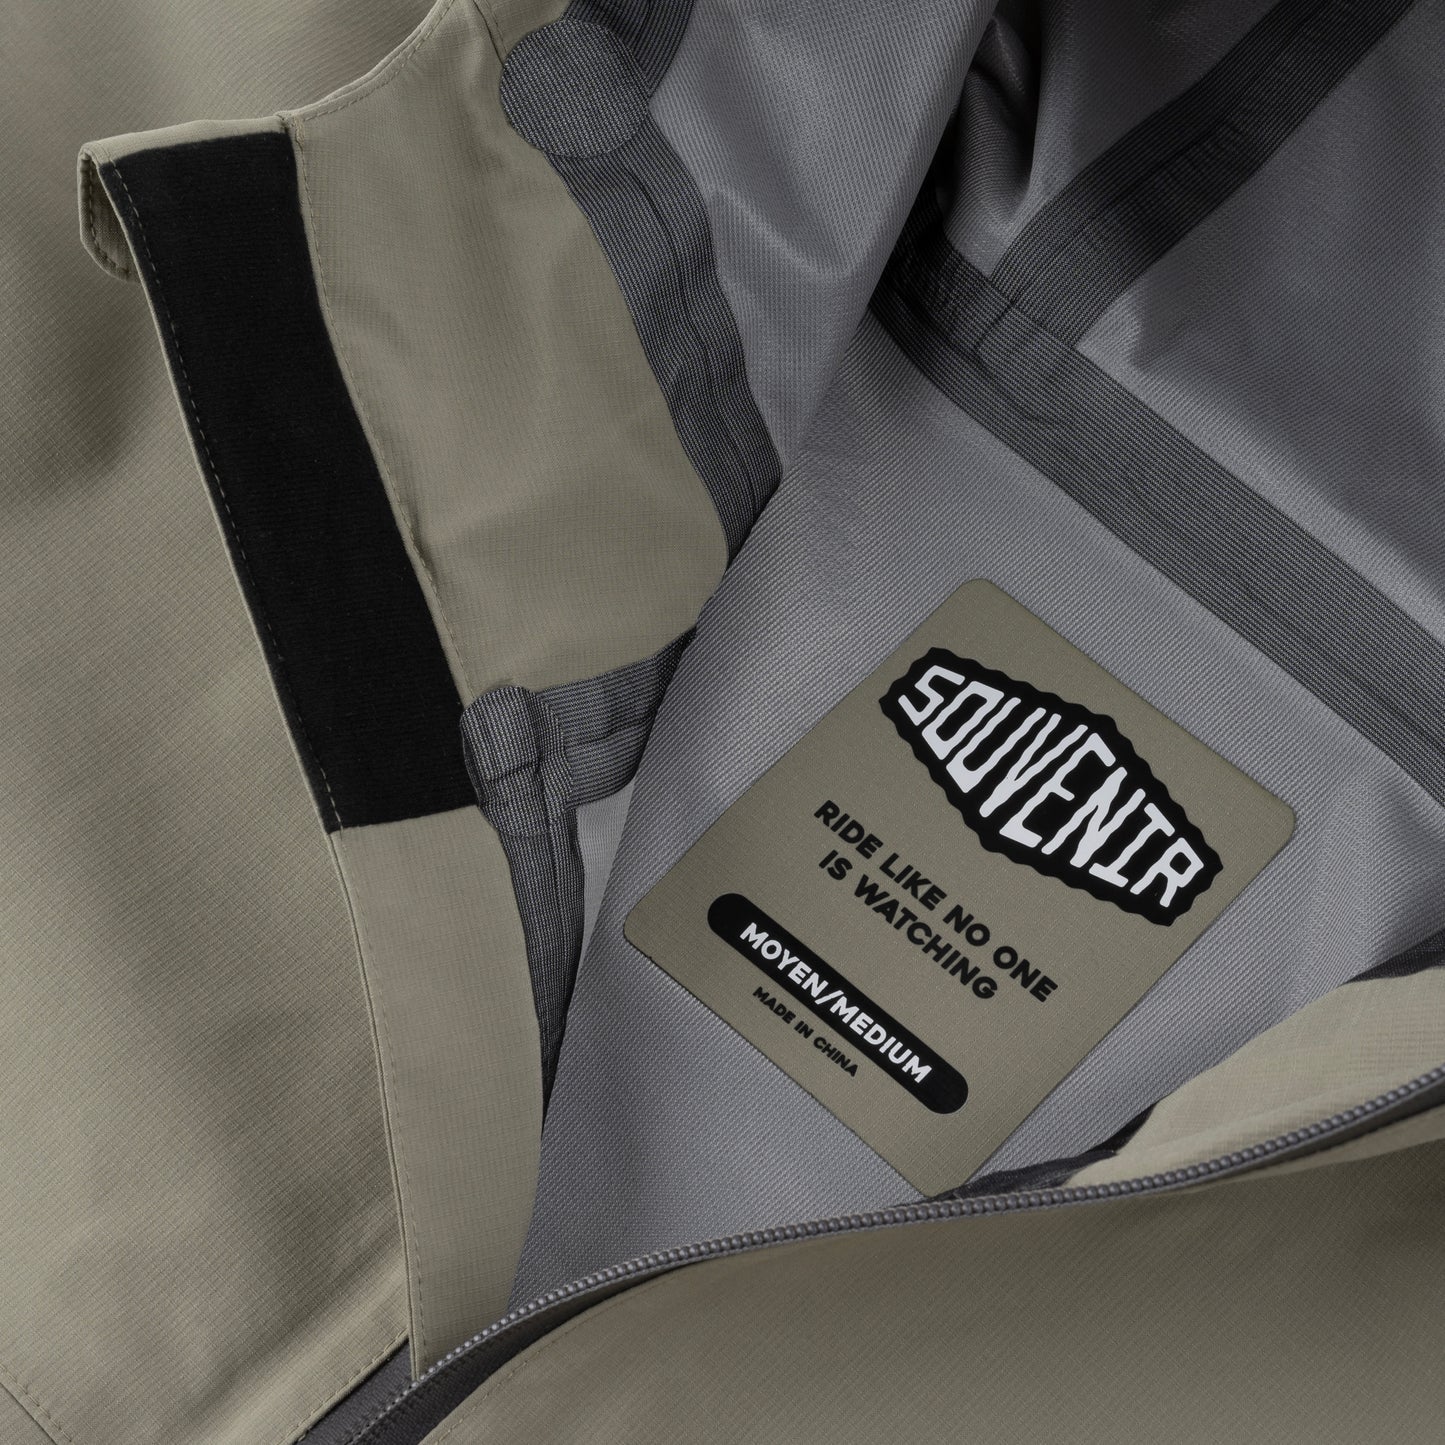 Souvenir - 3 Layer Ripstop Shell Jacket